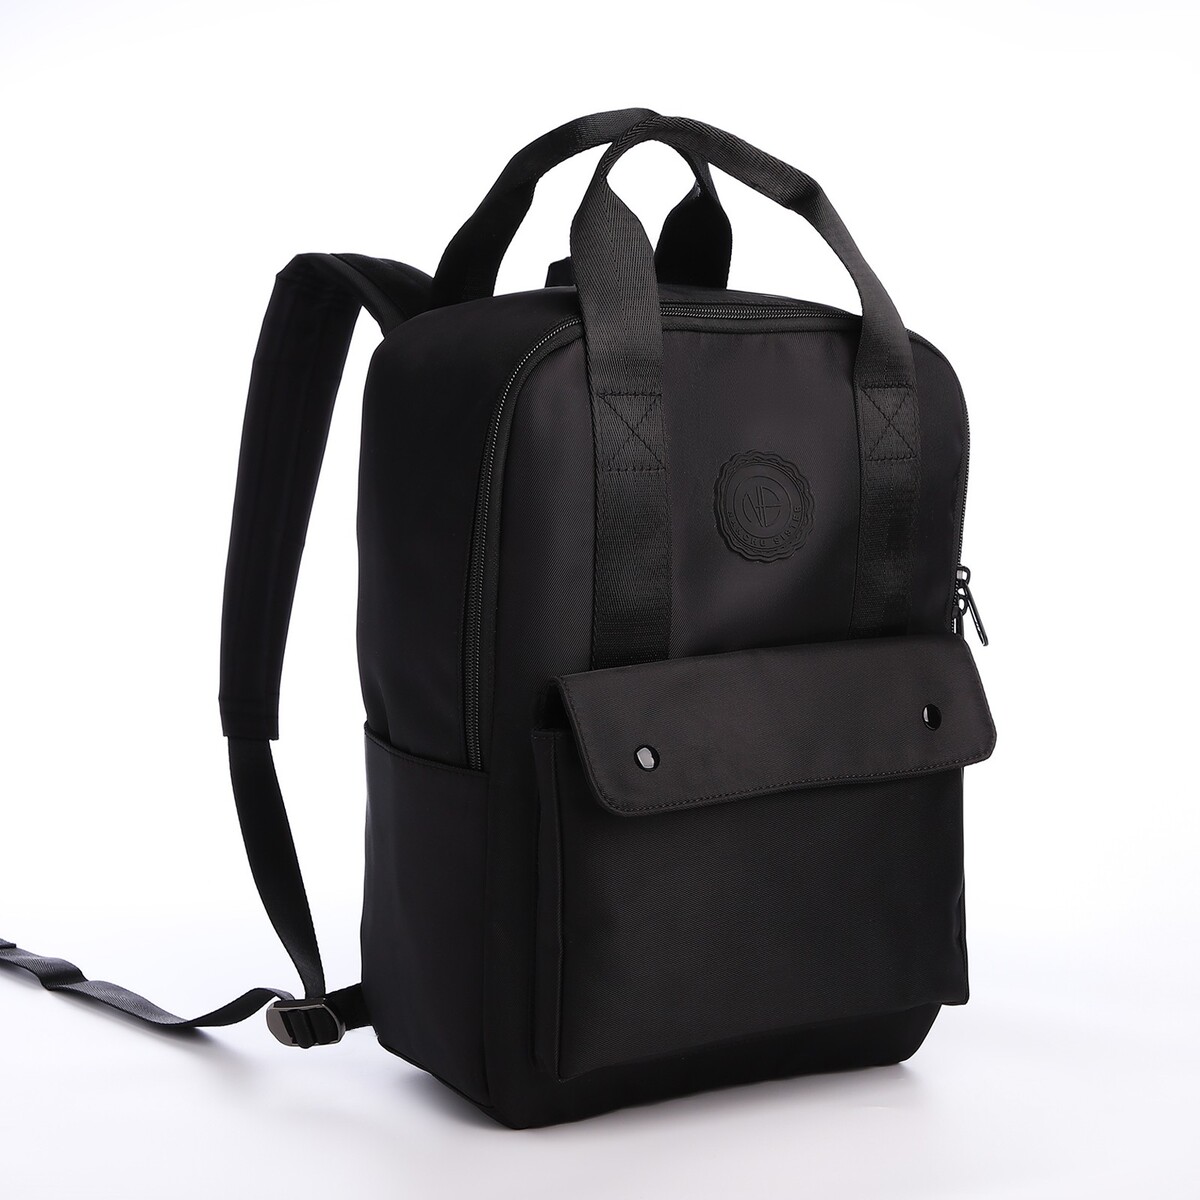 Рюкзак молодежный из текстиля на молнии, отдел для ноутбука, 4 кармана, цвет черный рюкзак для ноутбука 14 1 samsonite grey kj2 08002